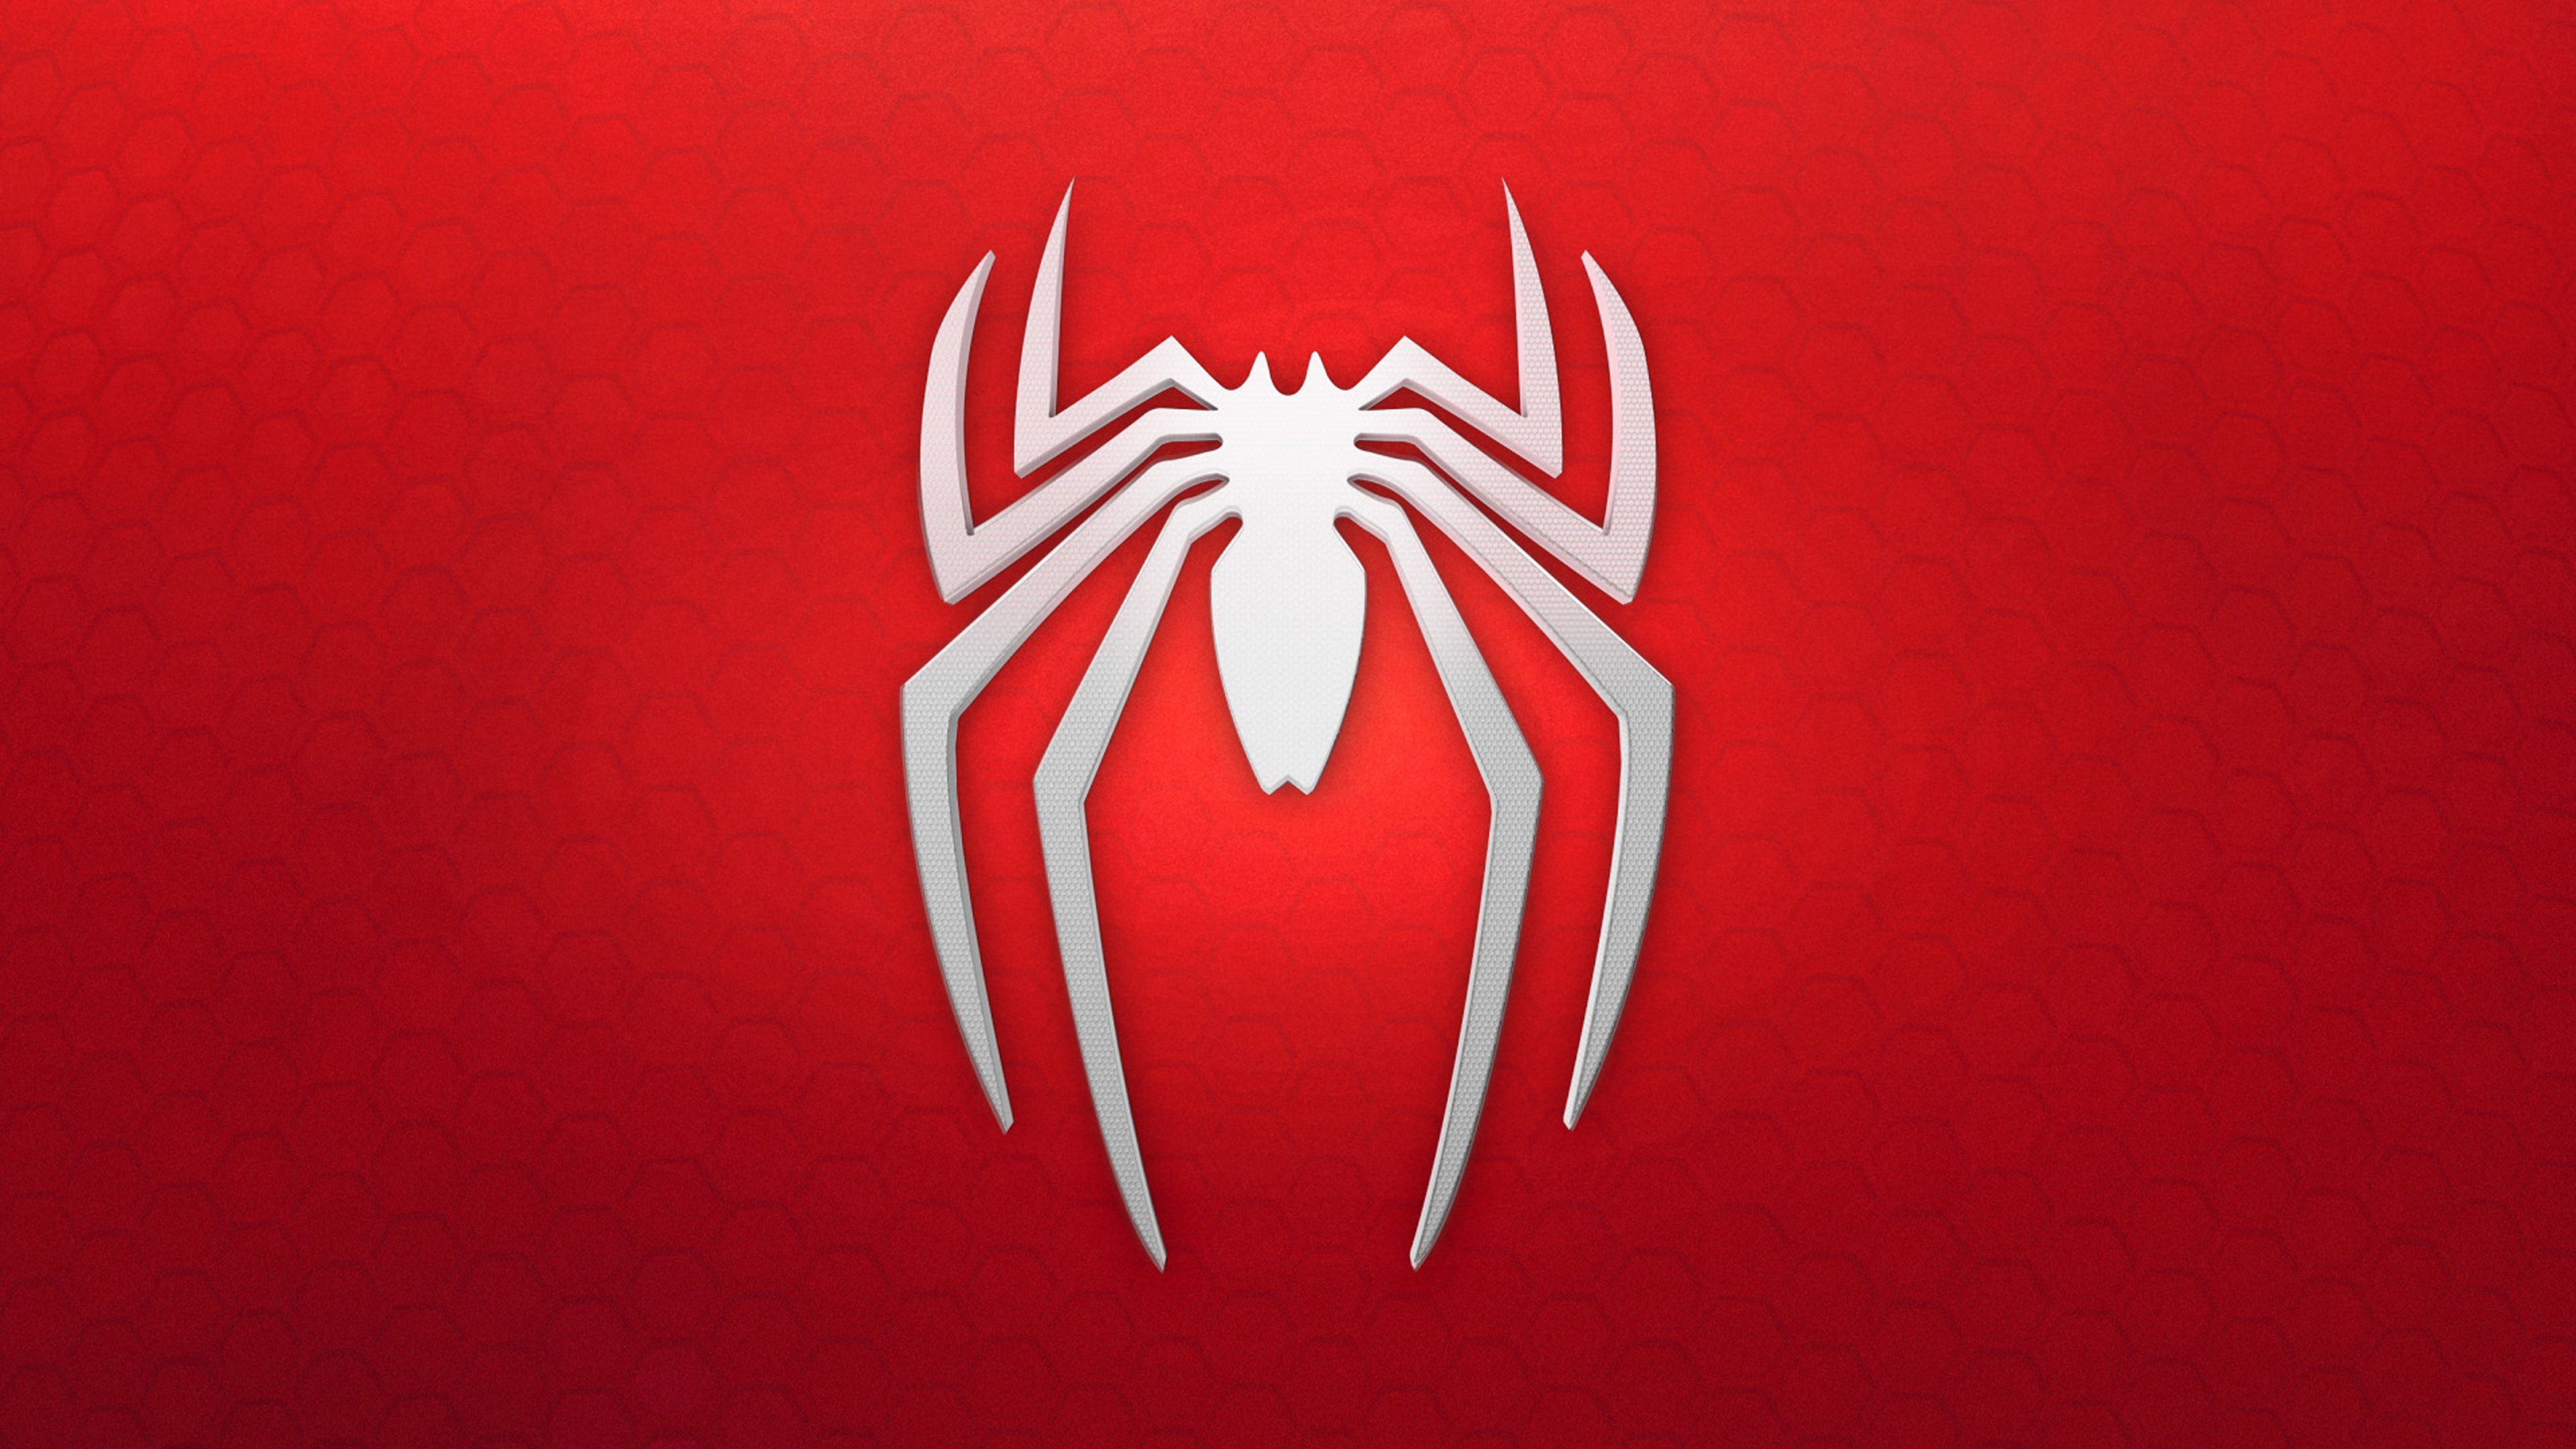 Spiderman 4k Logo Background. Hero wallpaper, Spiderman ps4 wallpaper, Superman wallpaper